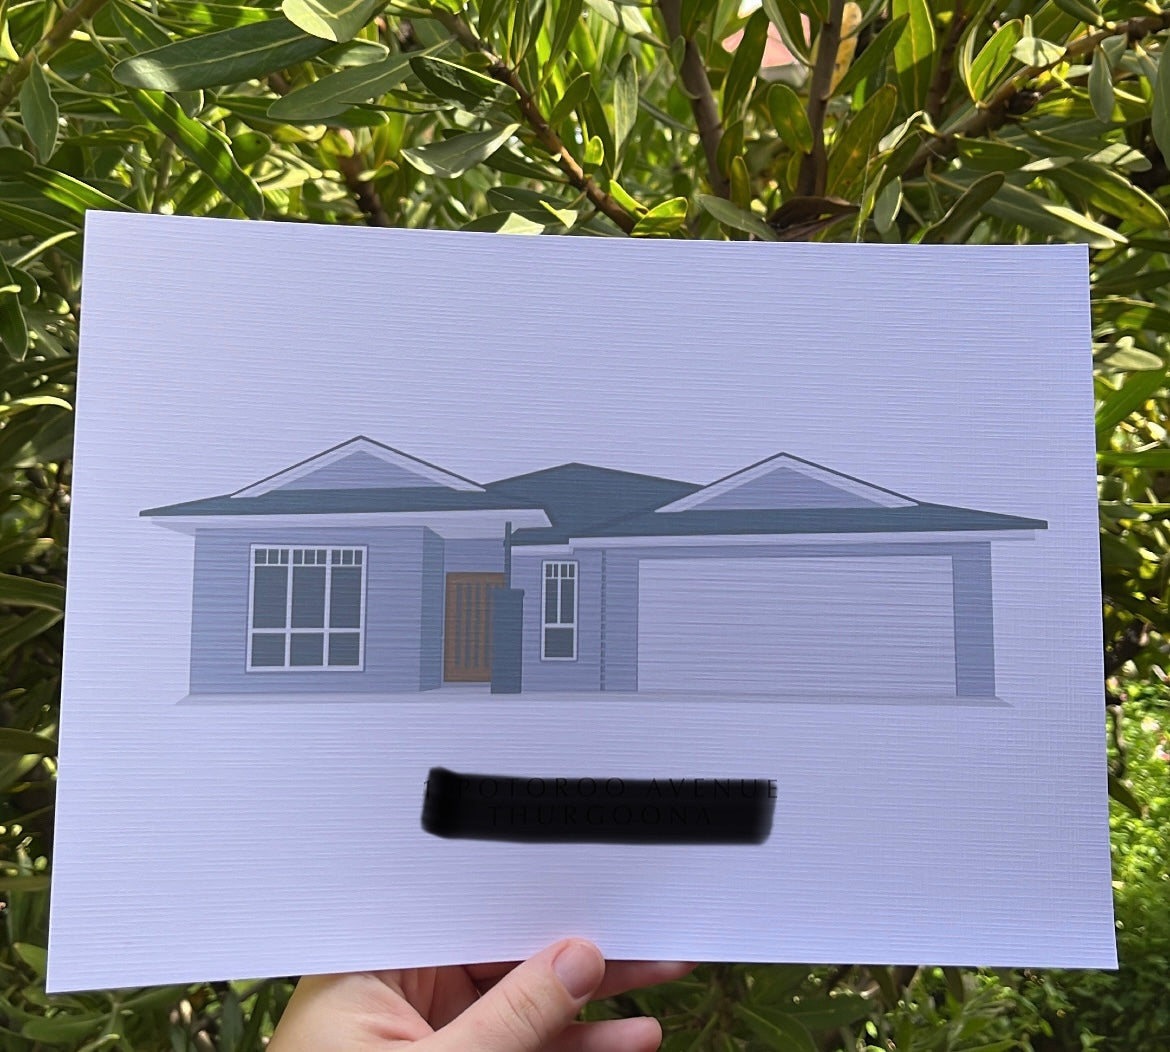 House / Shop Illustration